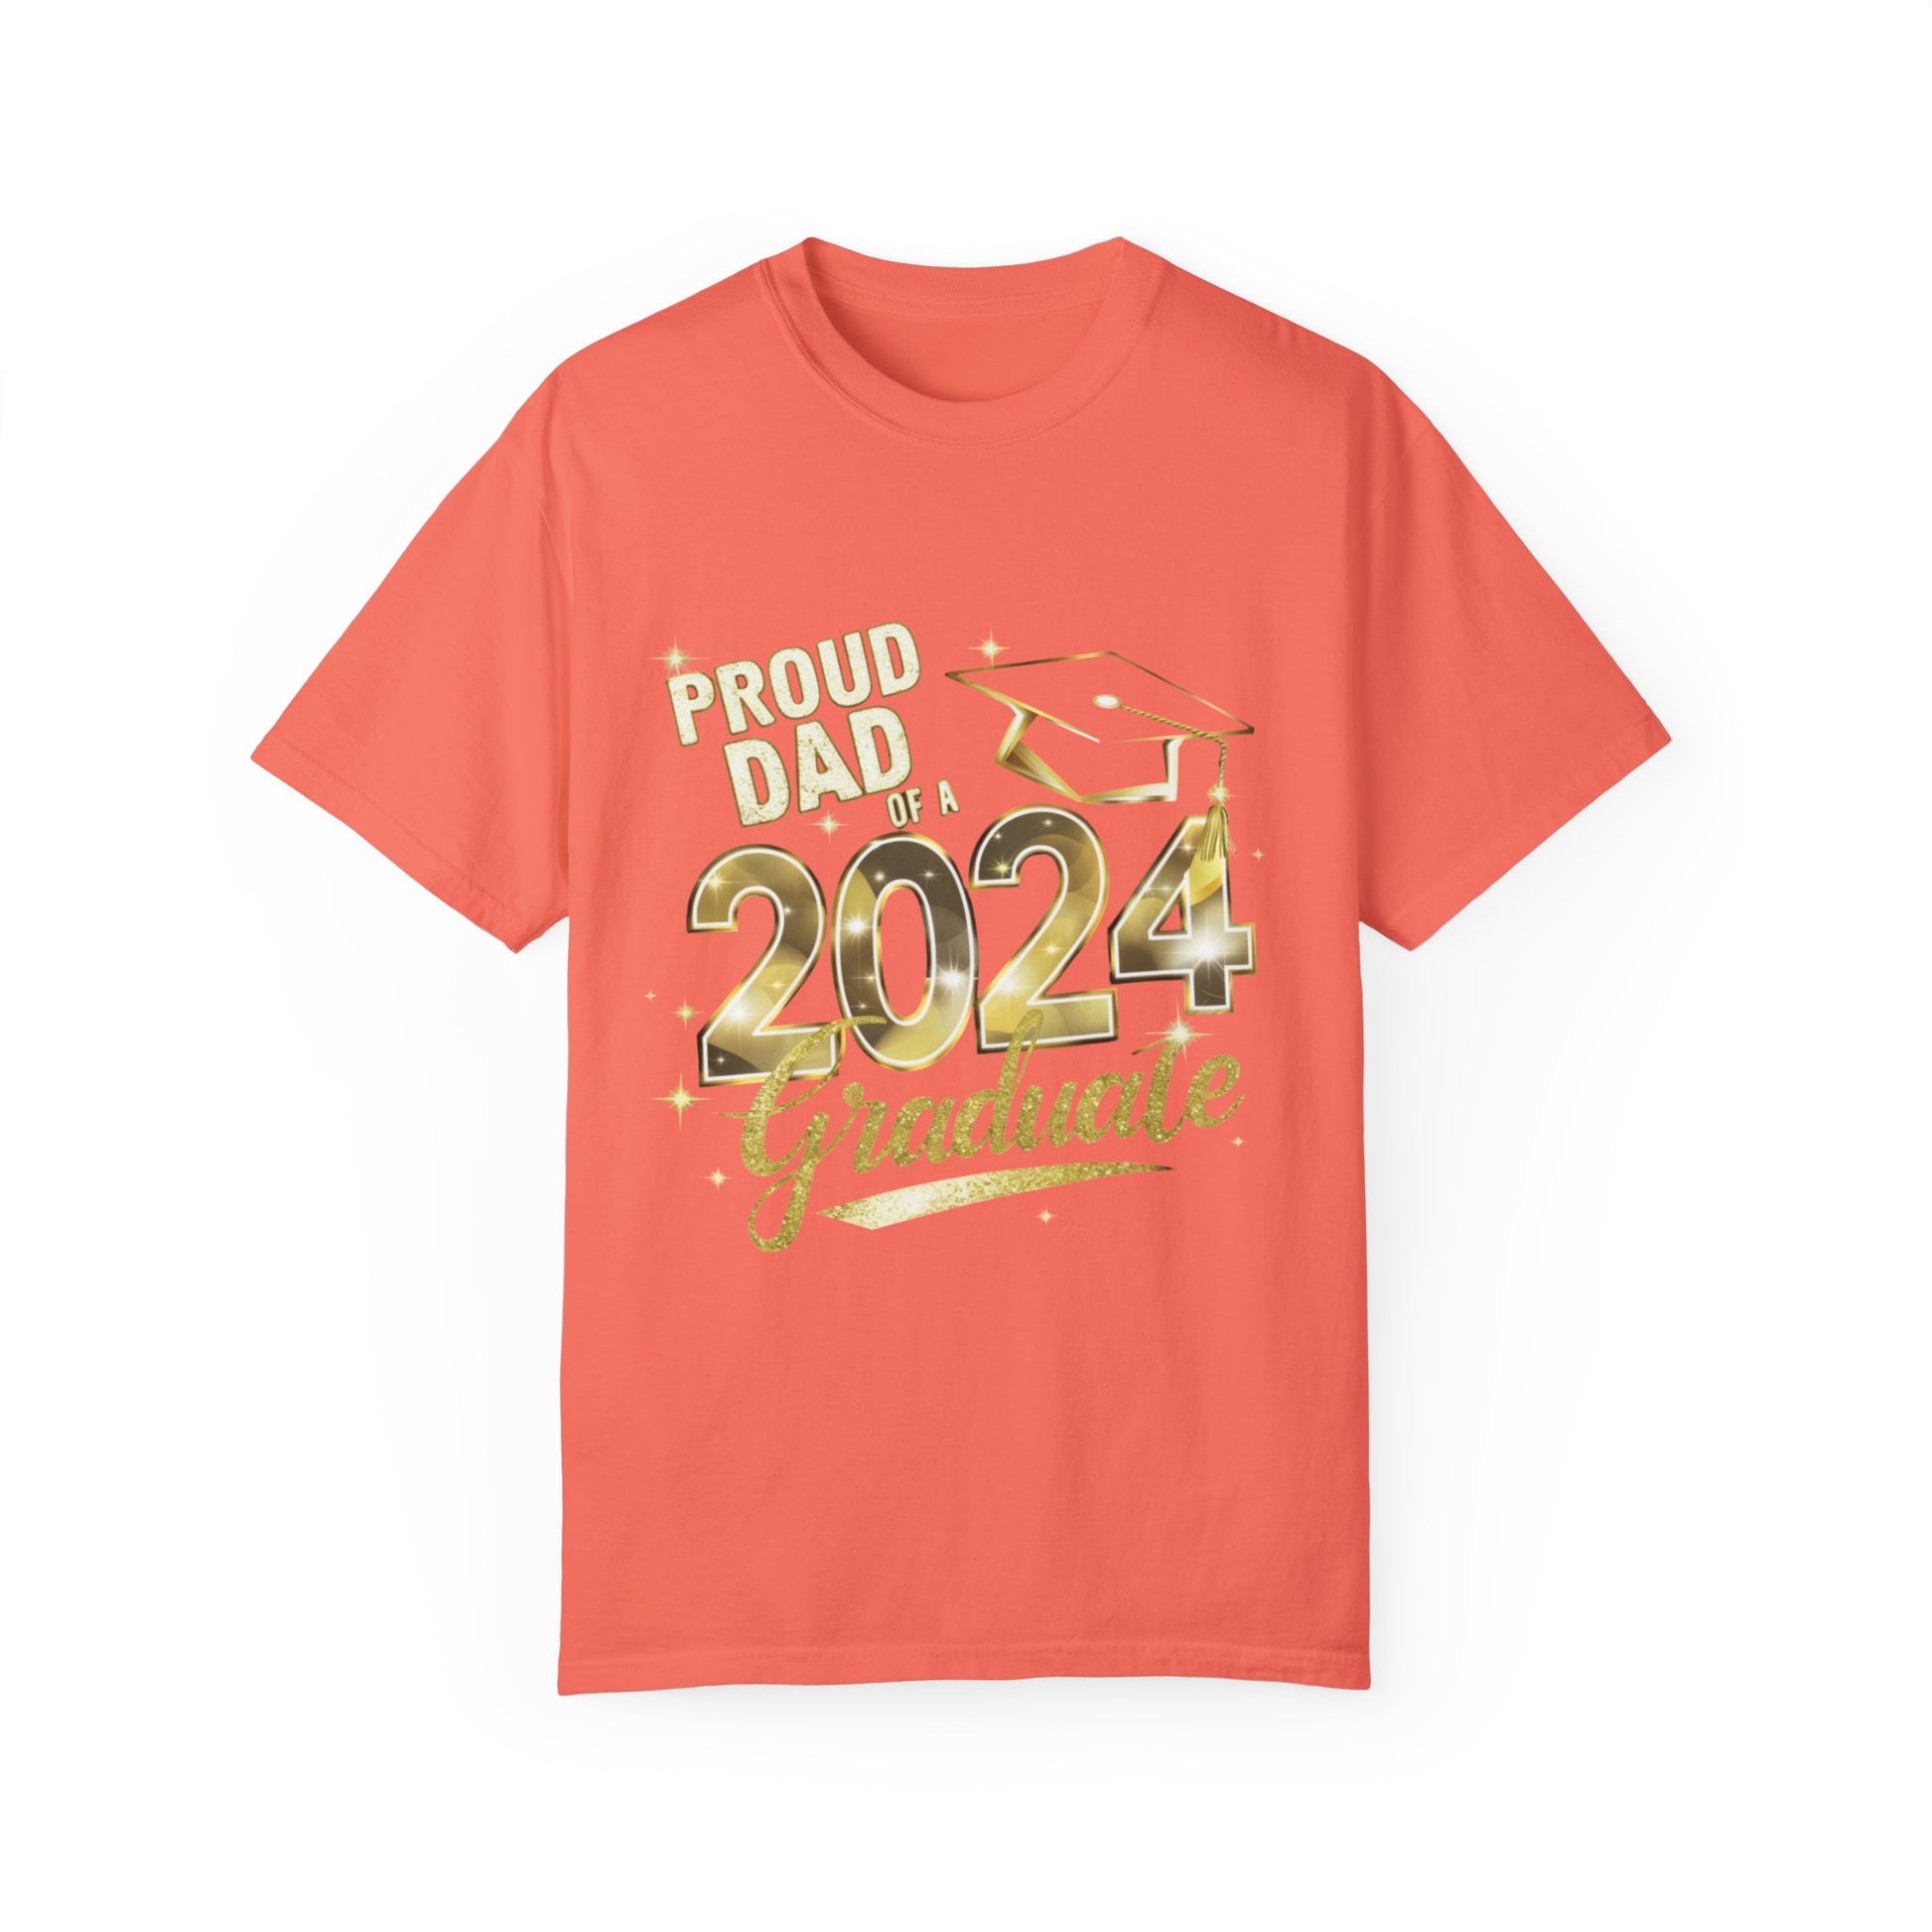 Proud of Dad 2024 Graduate Unisex Garment-dyed T-shirt Cotton Funny Humorous Graphic Soft Premium Unisex Men Women Bright Salmon T-shirt Birthday Gift-6